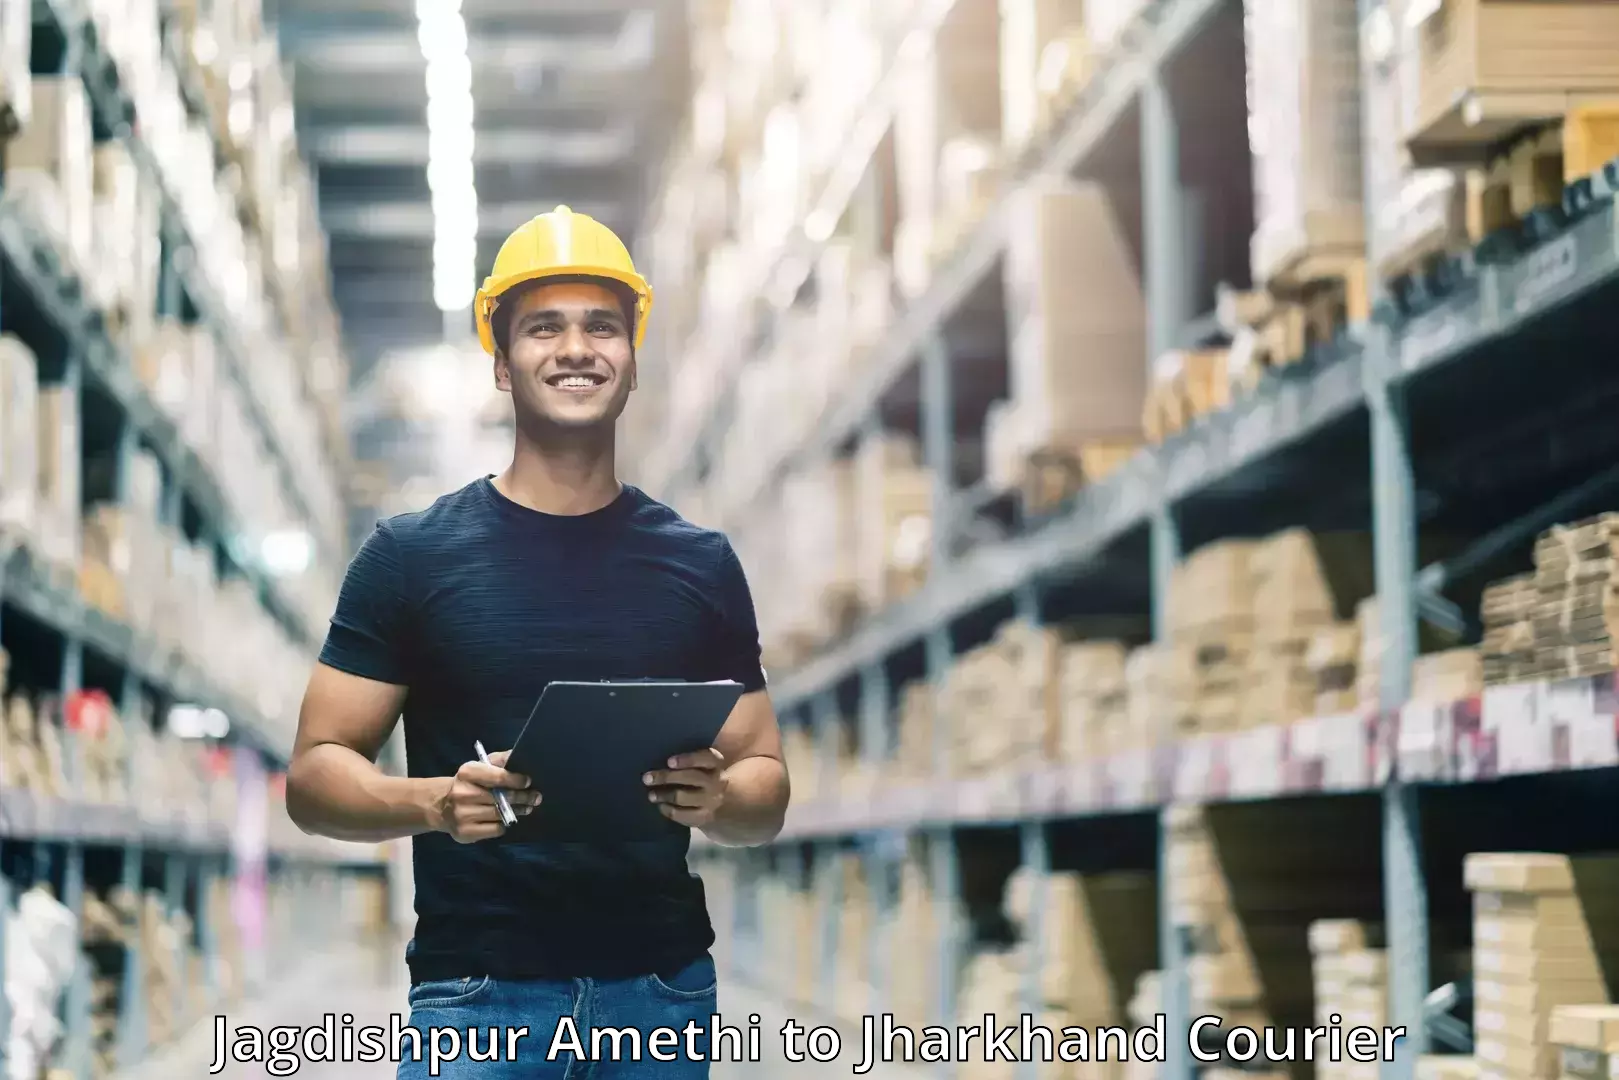 Cost-effective shipping solutions Jagdishpur Amethi to Jamtara